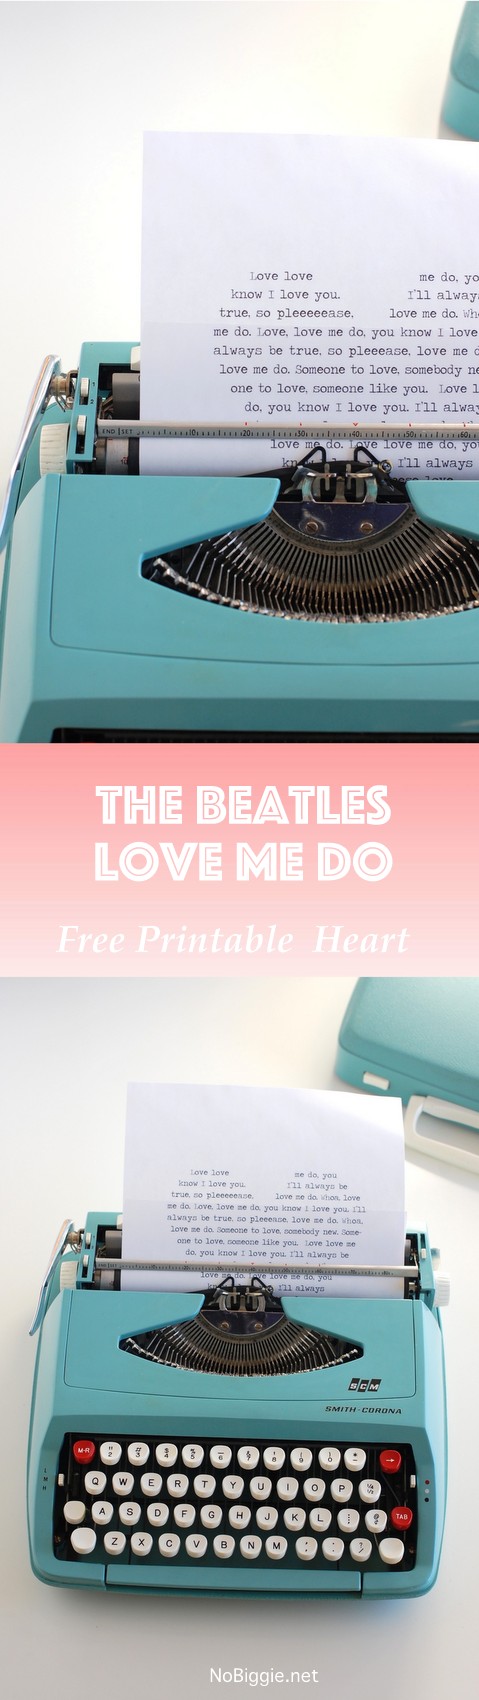 The Beatles - Love Me Do in a printable heart | NoBiggie.net